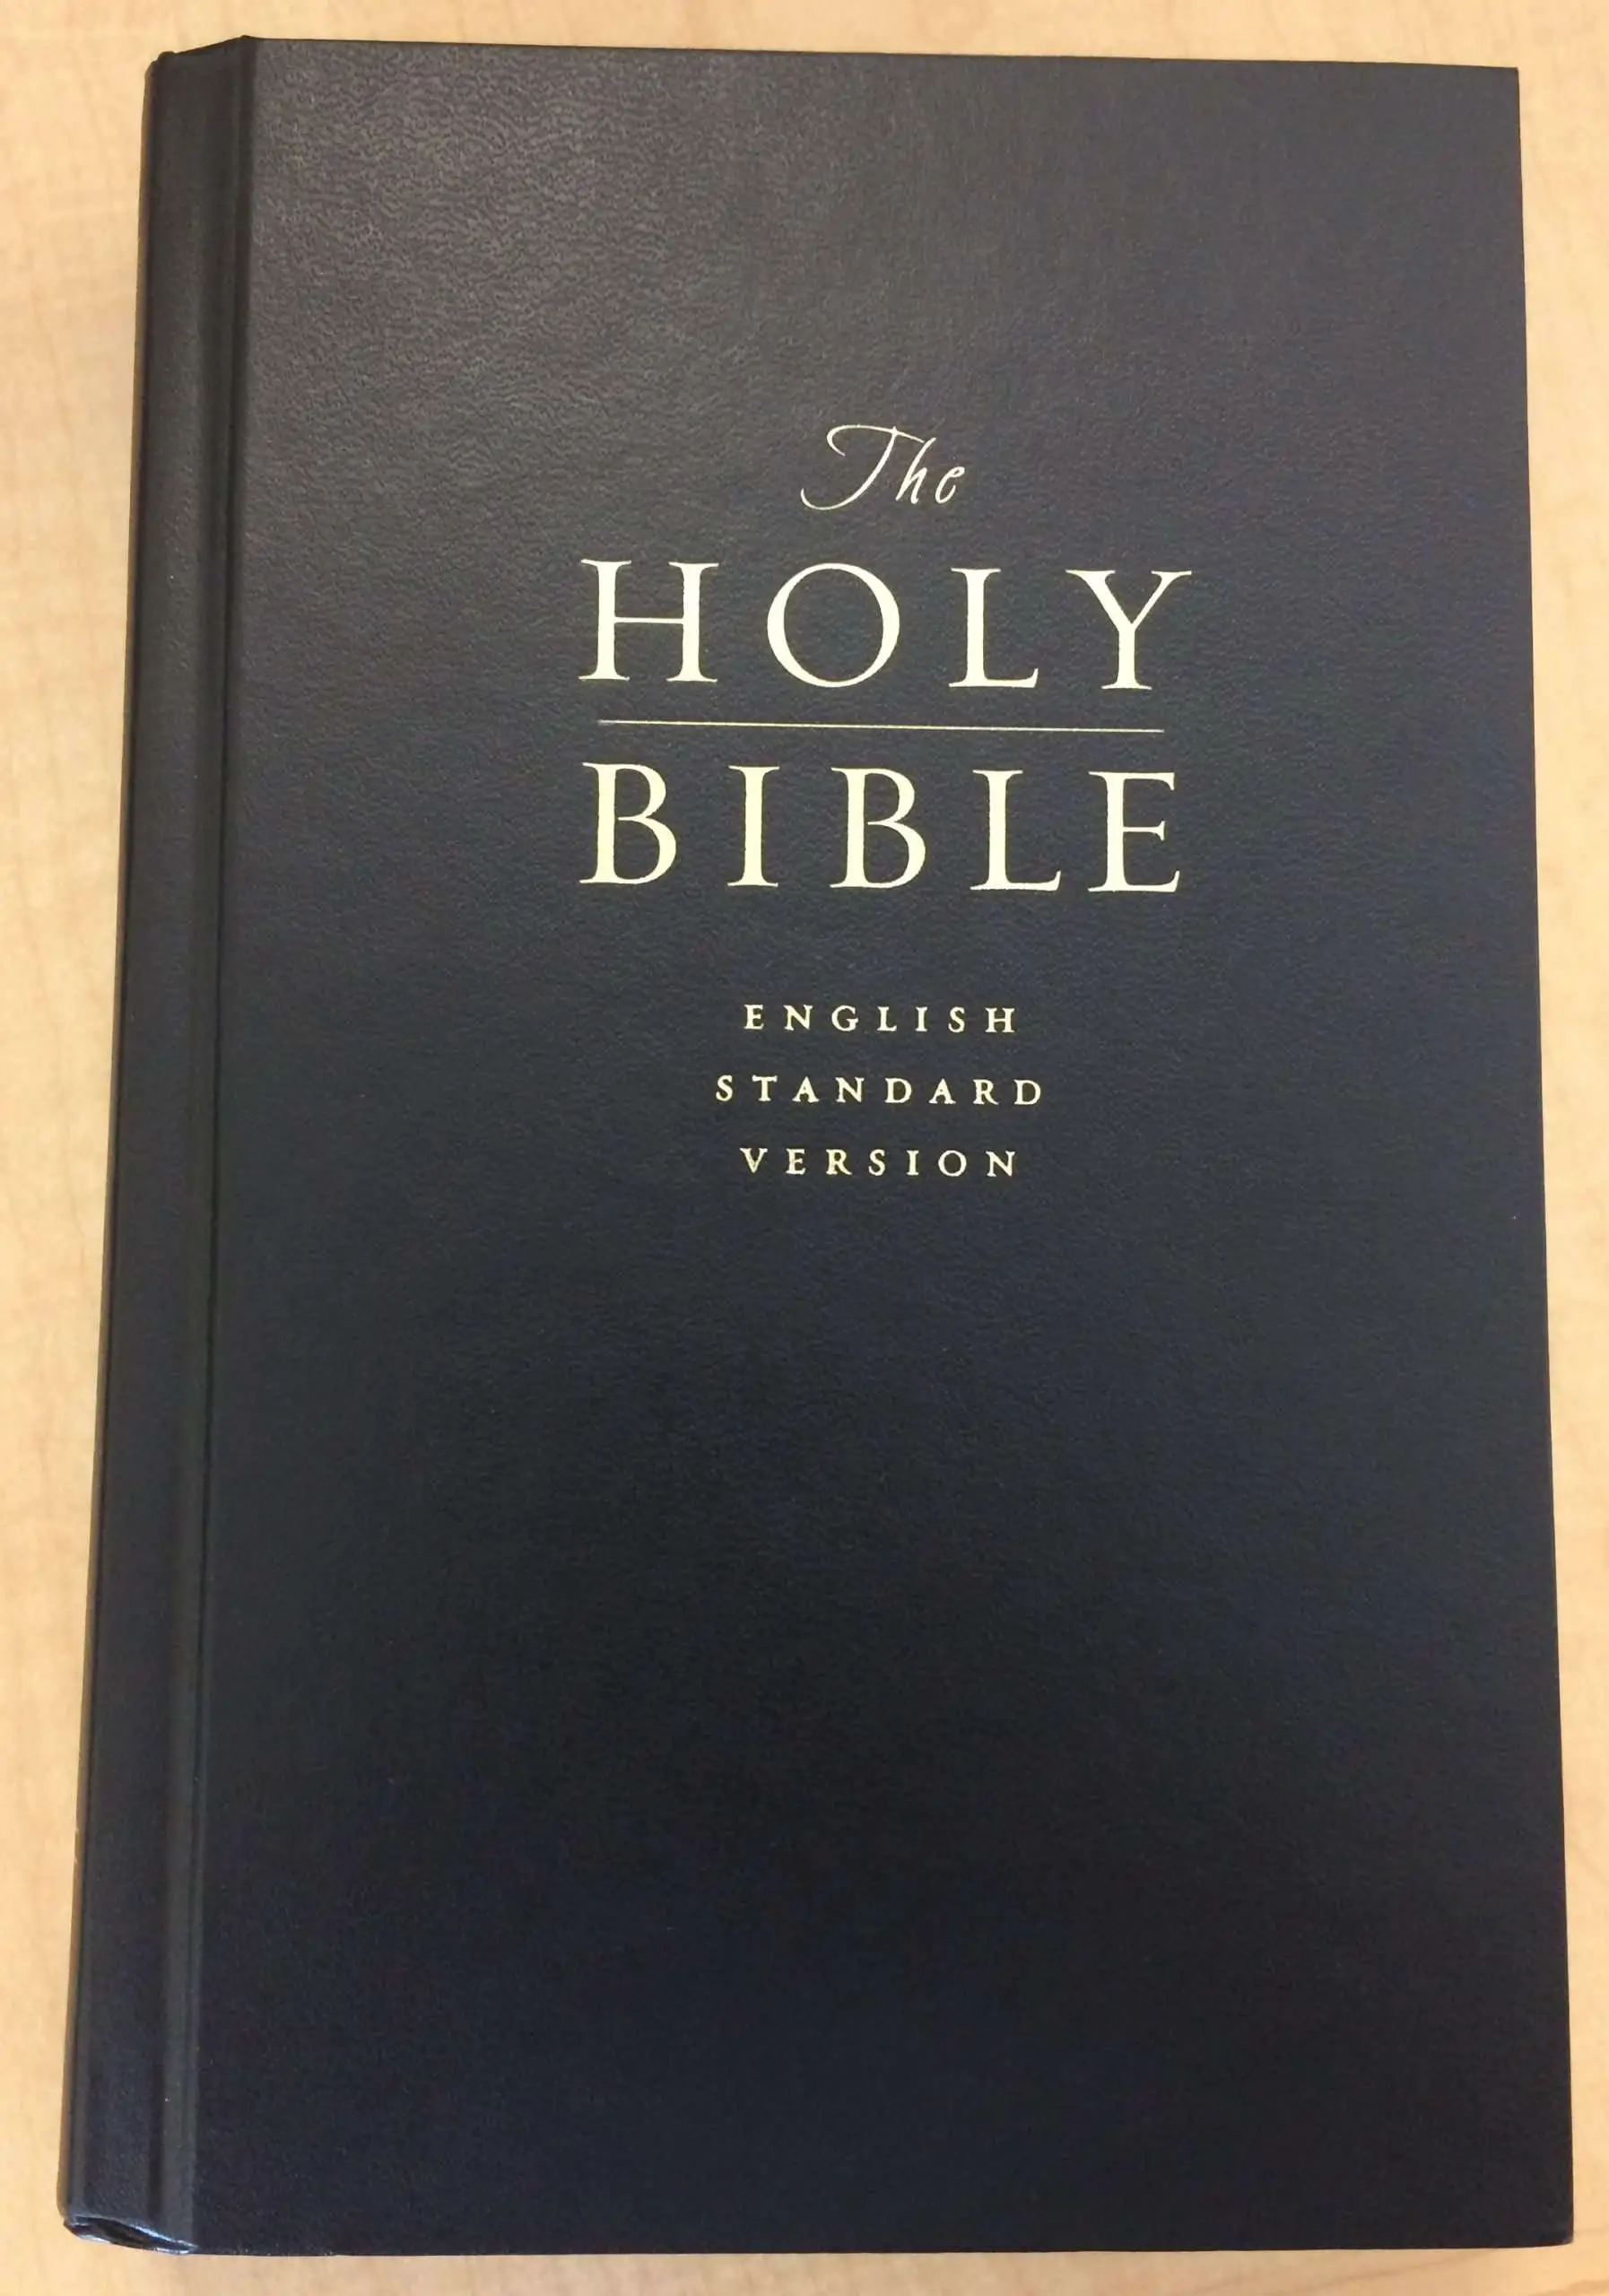 easiest bible to understand